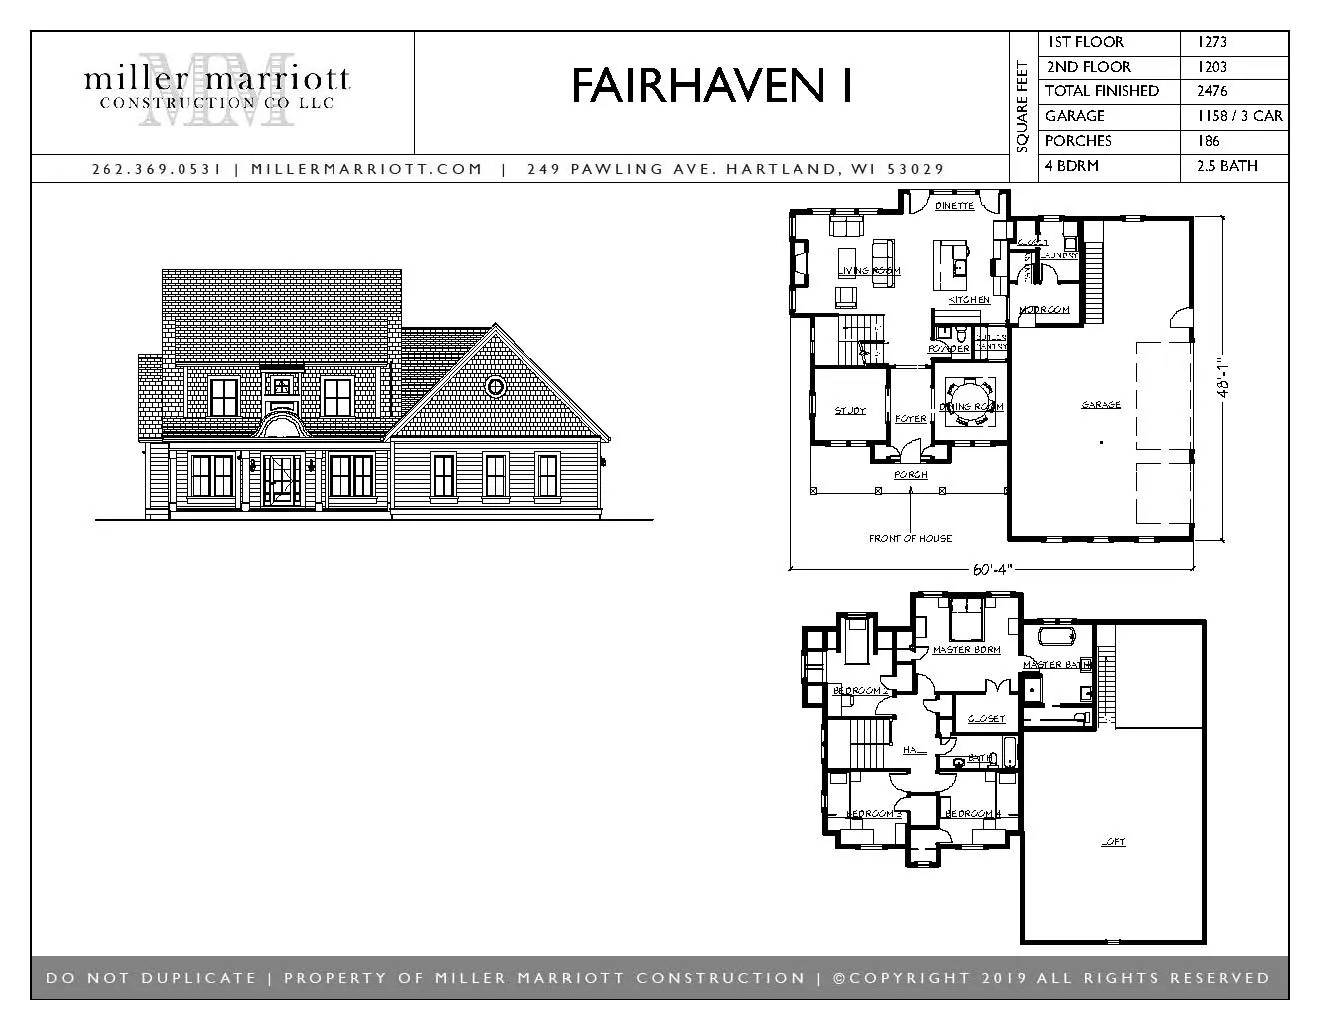 Fairhaven I Home Plan